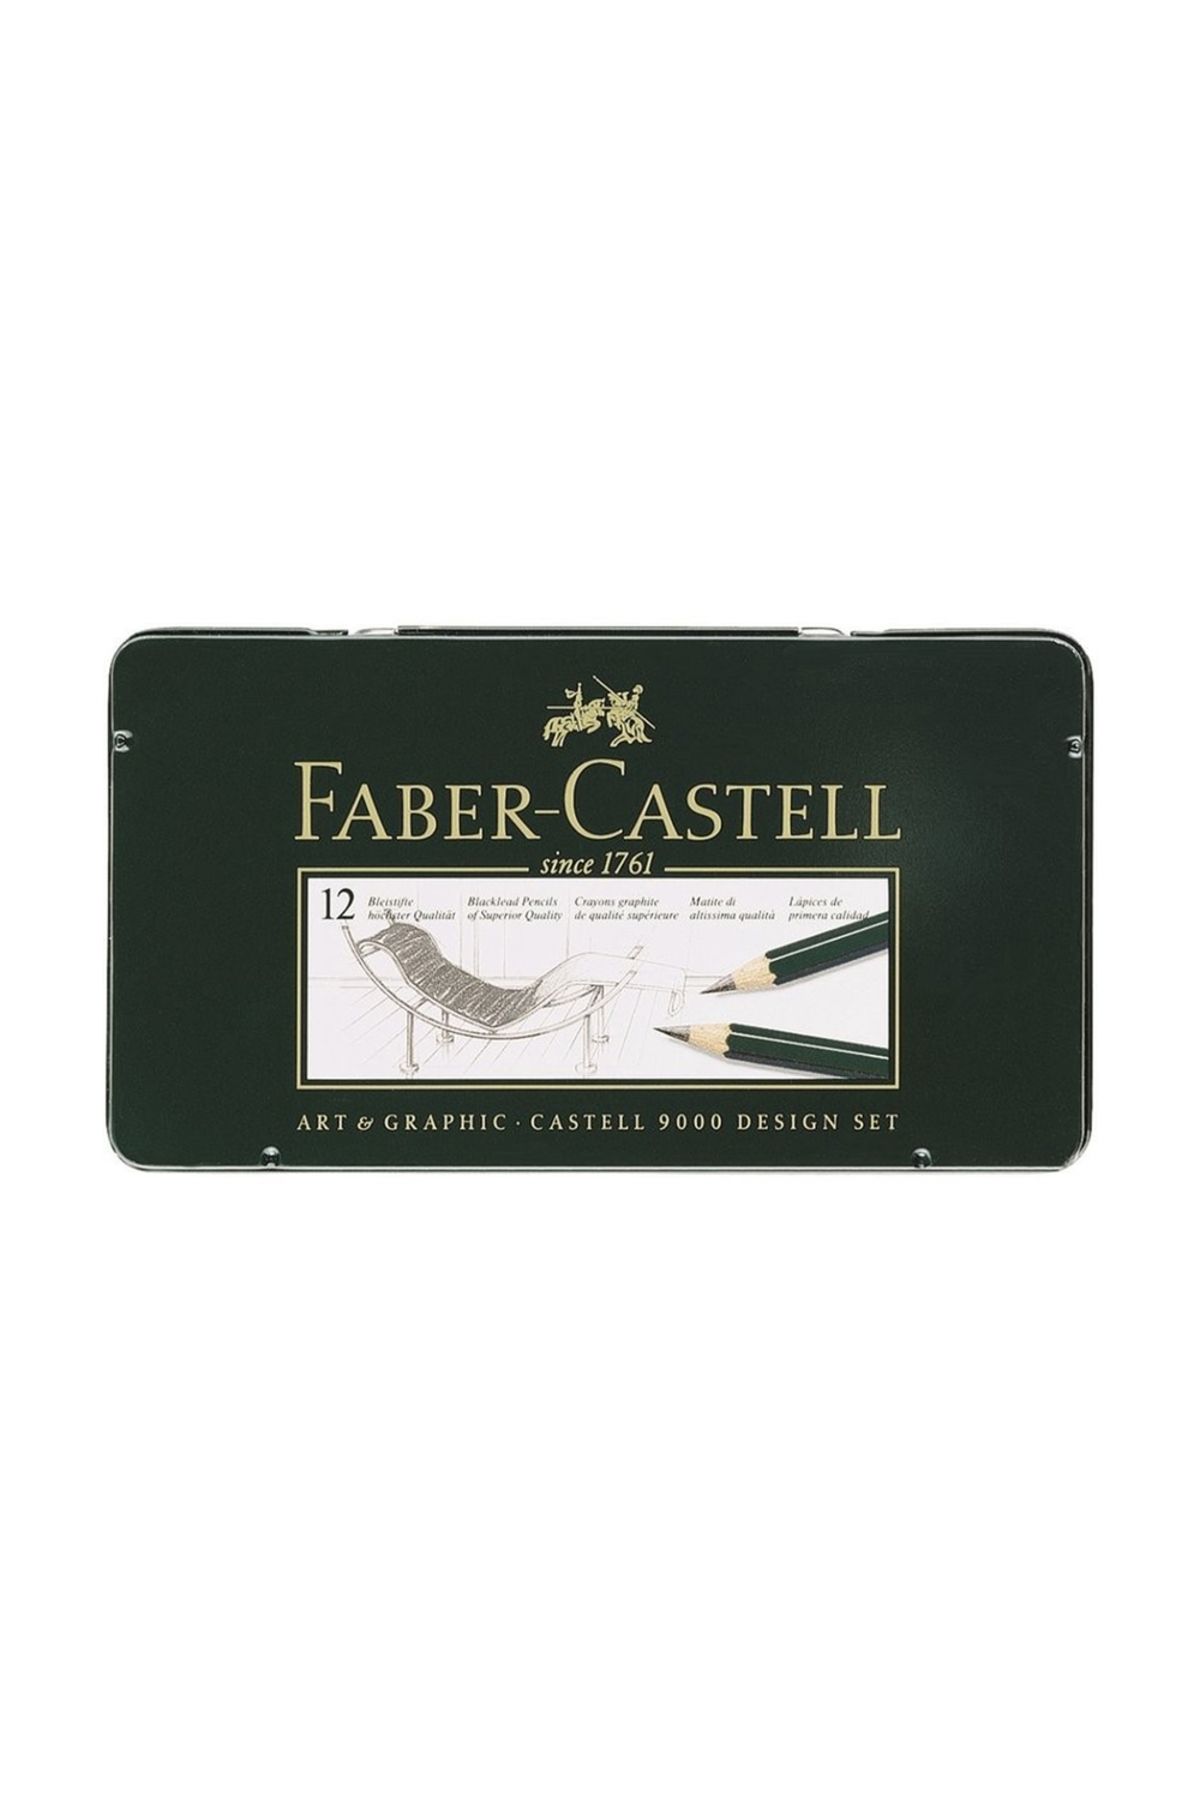 Faber Castell 9000 Design Dereceli Kurşun Kalem Seti 12’li 5B-5H